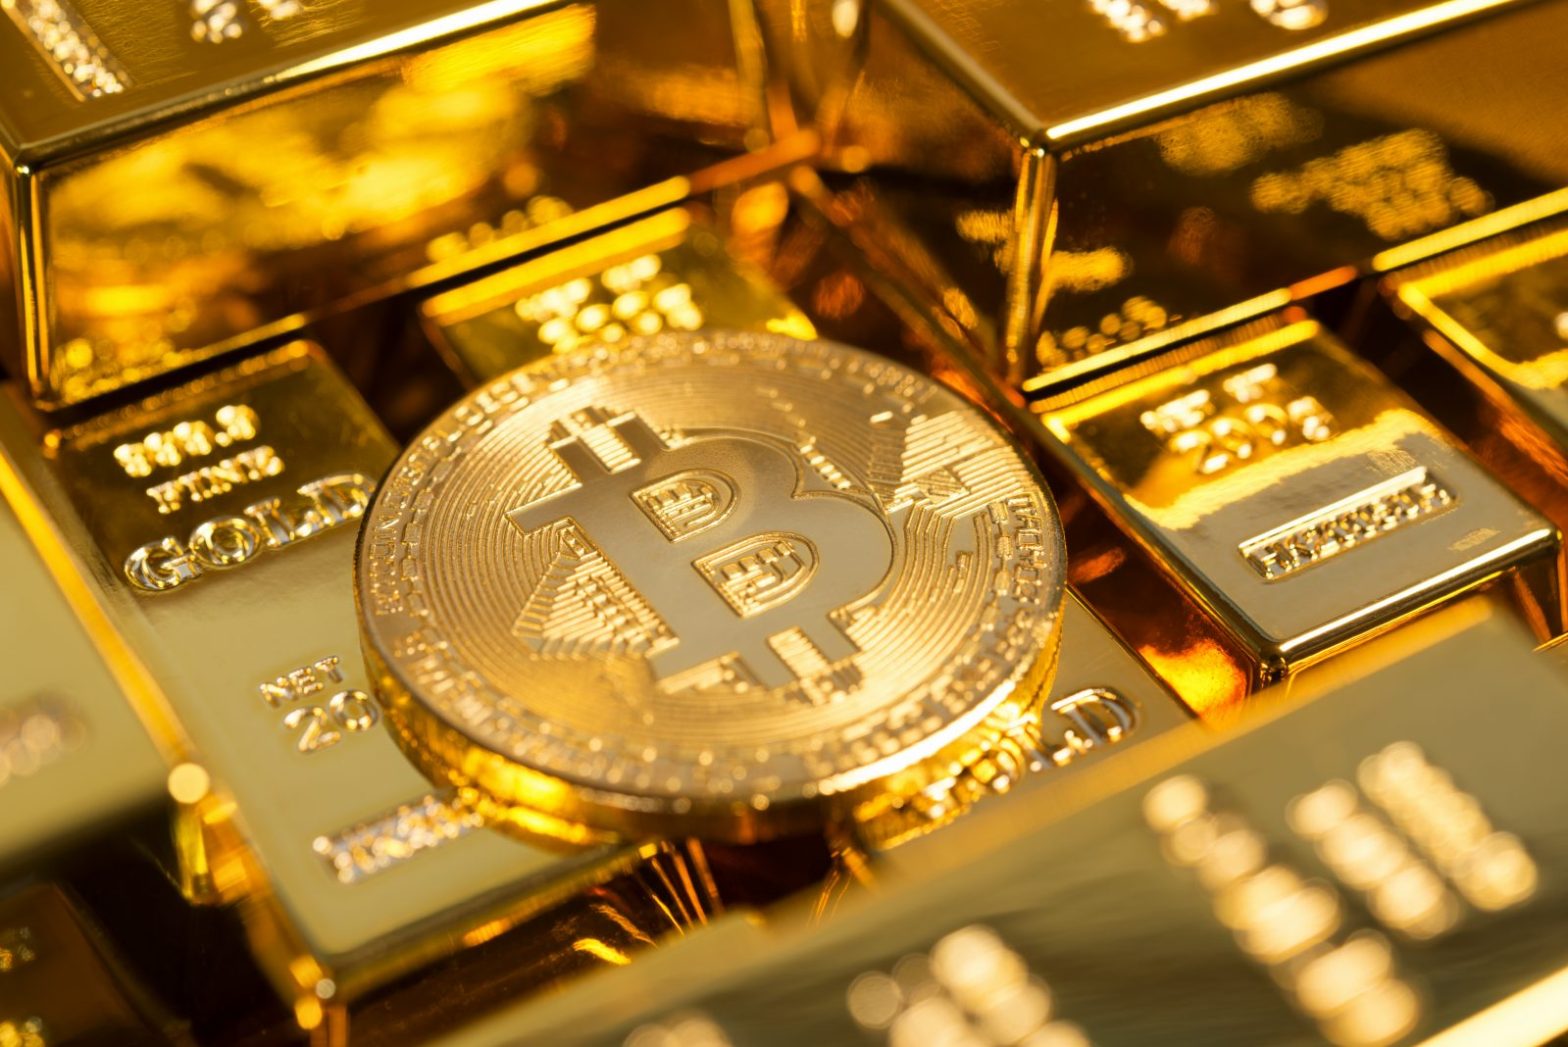 Bitcoin dips towards $30,000 amid weaker sentiment